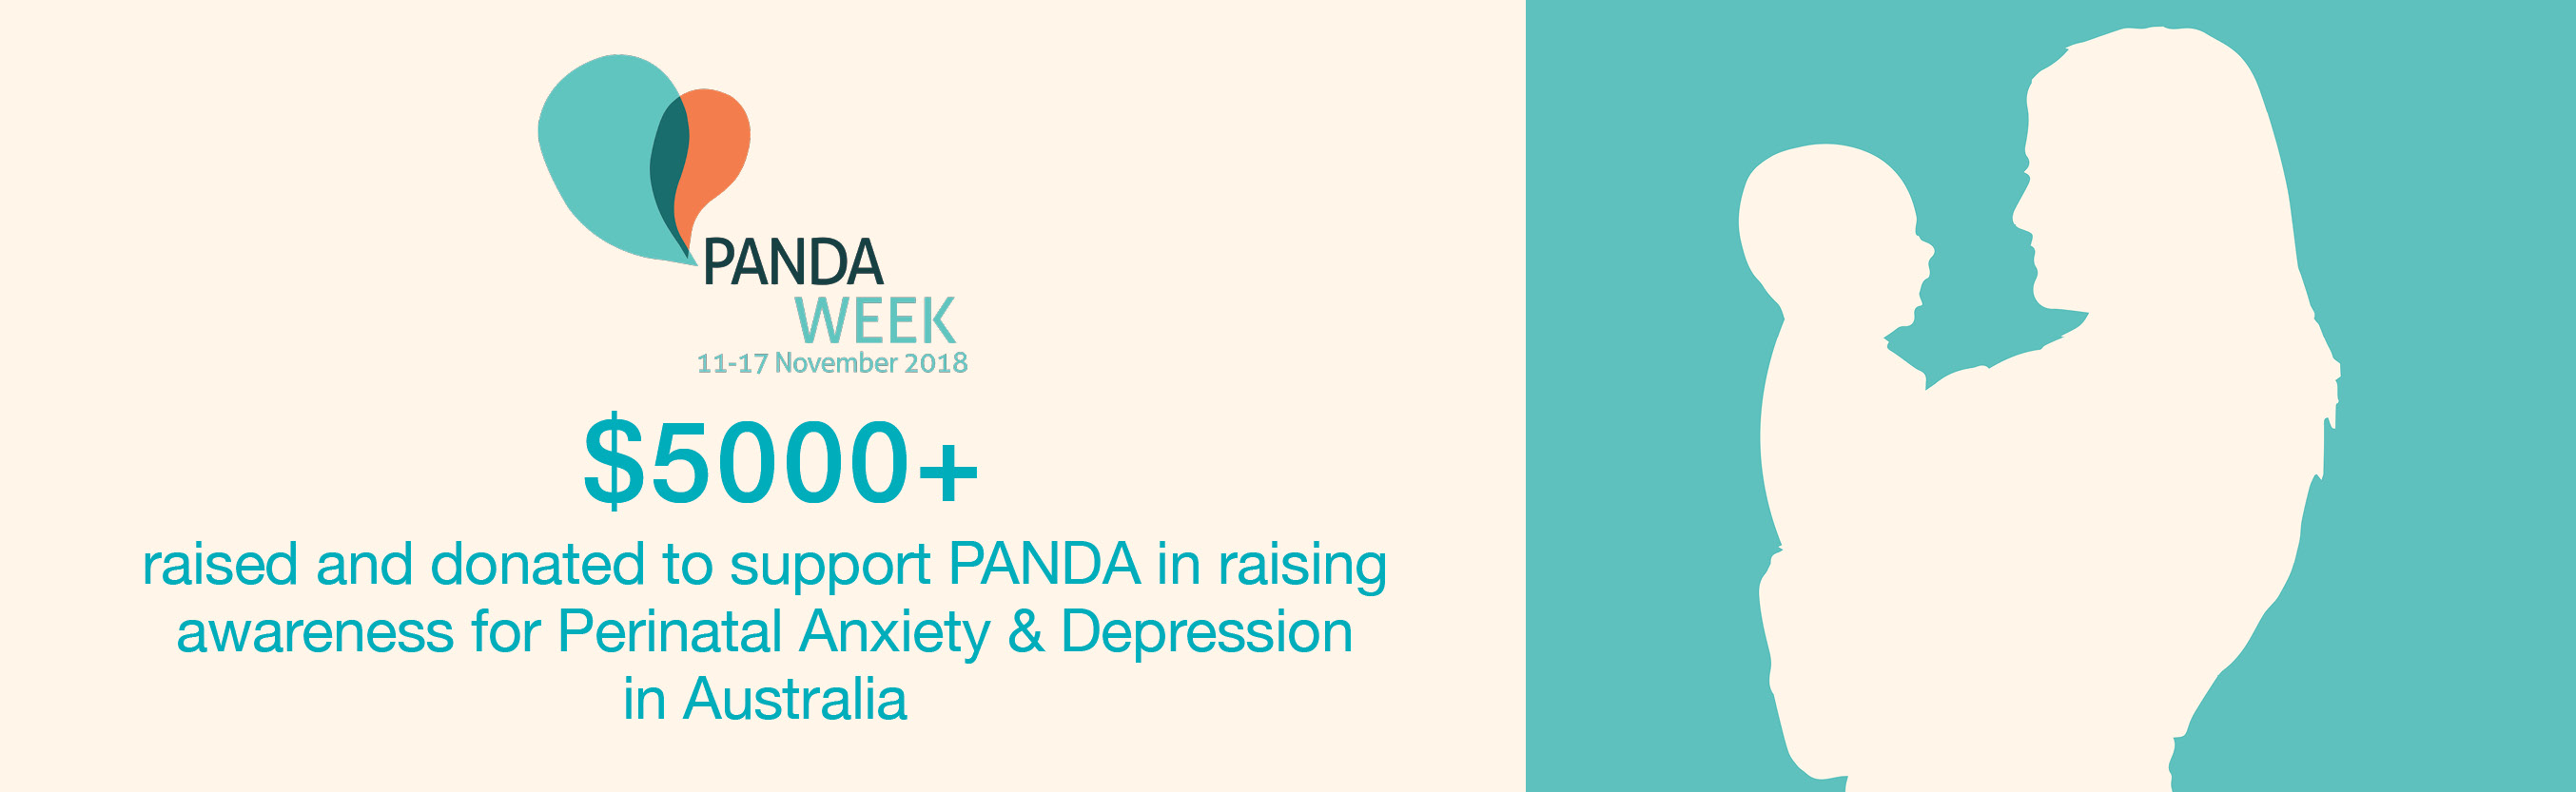 PANDA - raise awareness for Perinatal Anxiety & Depression